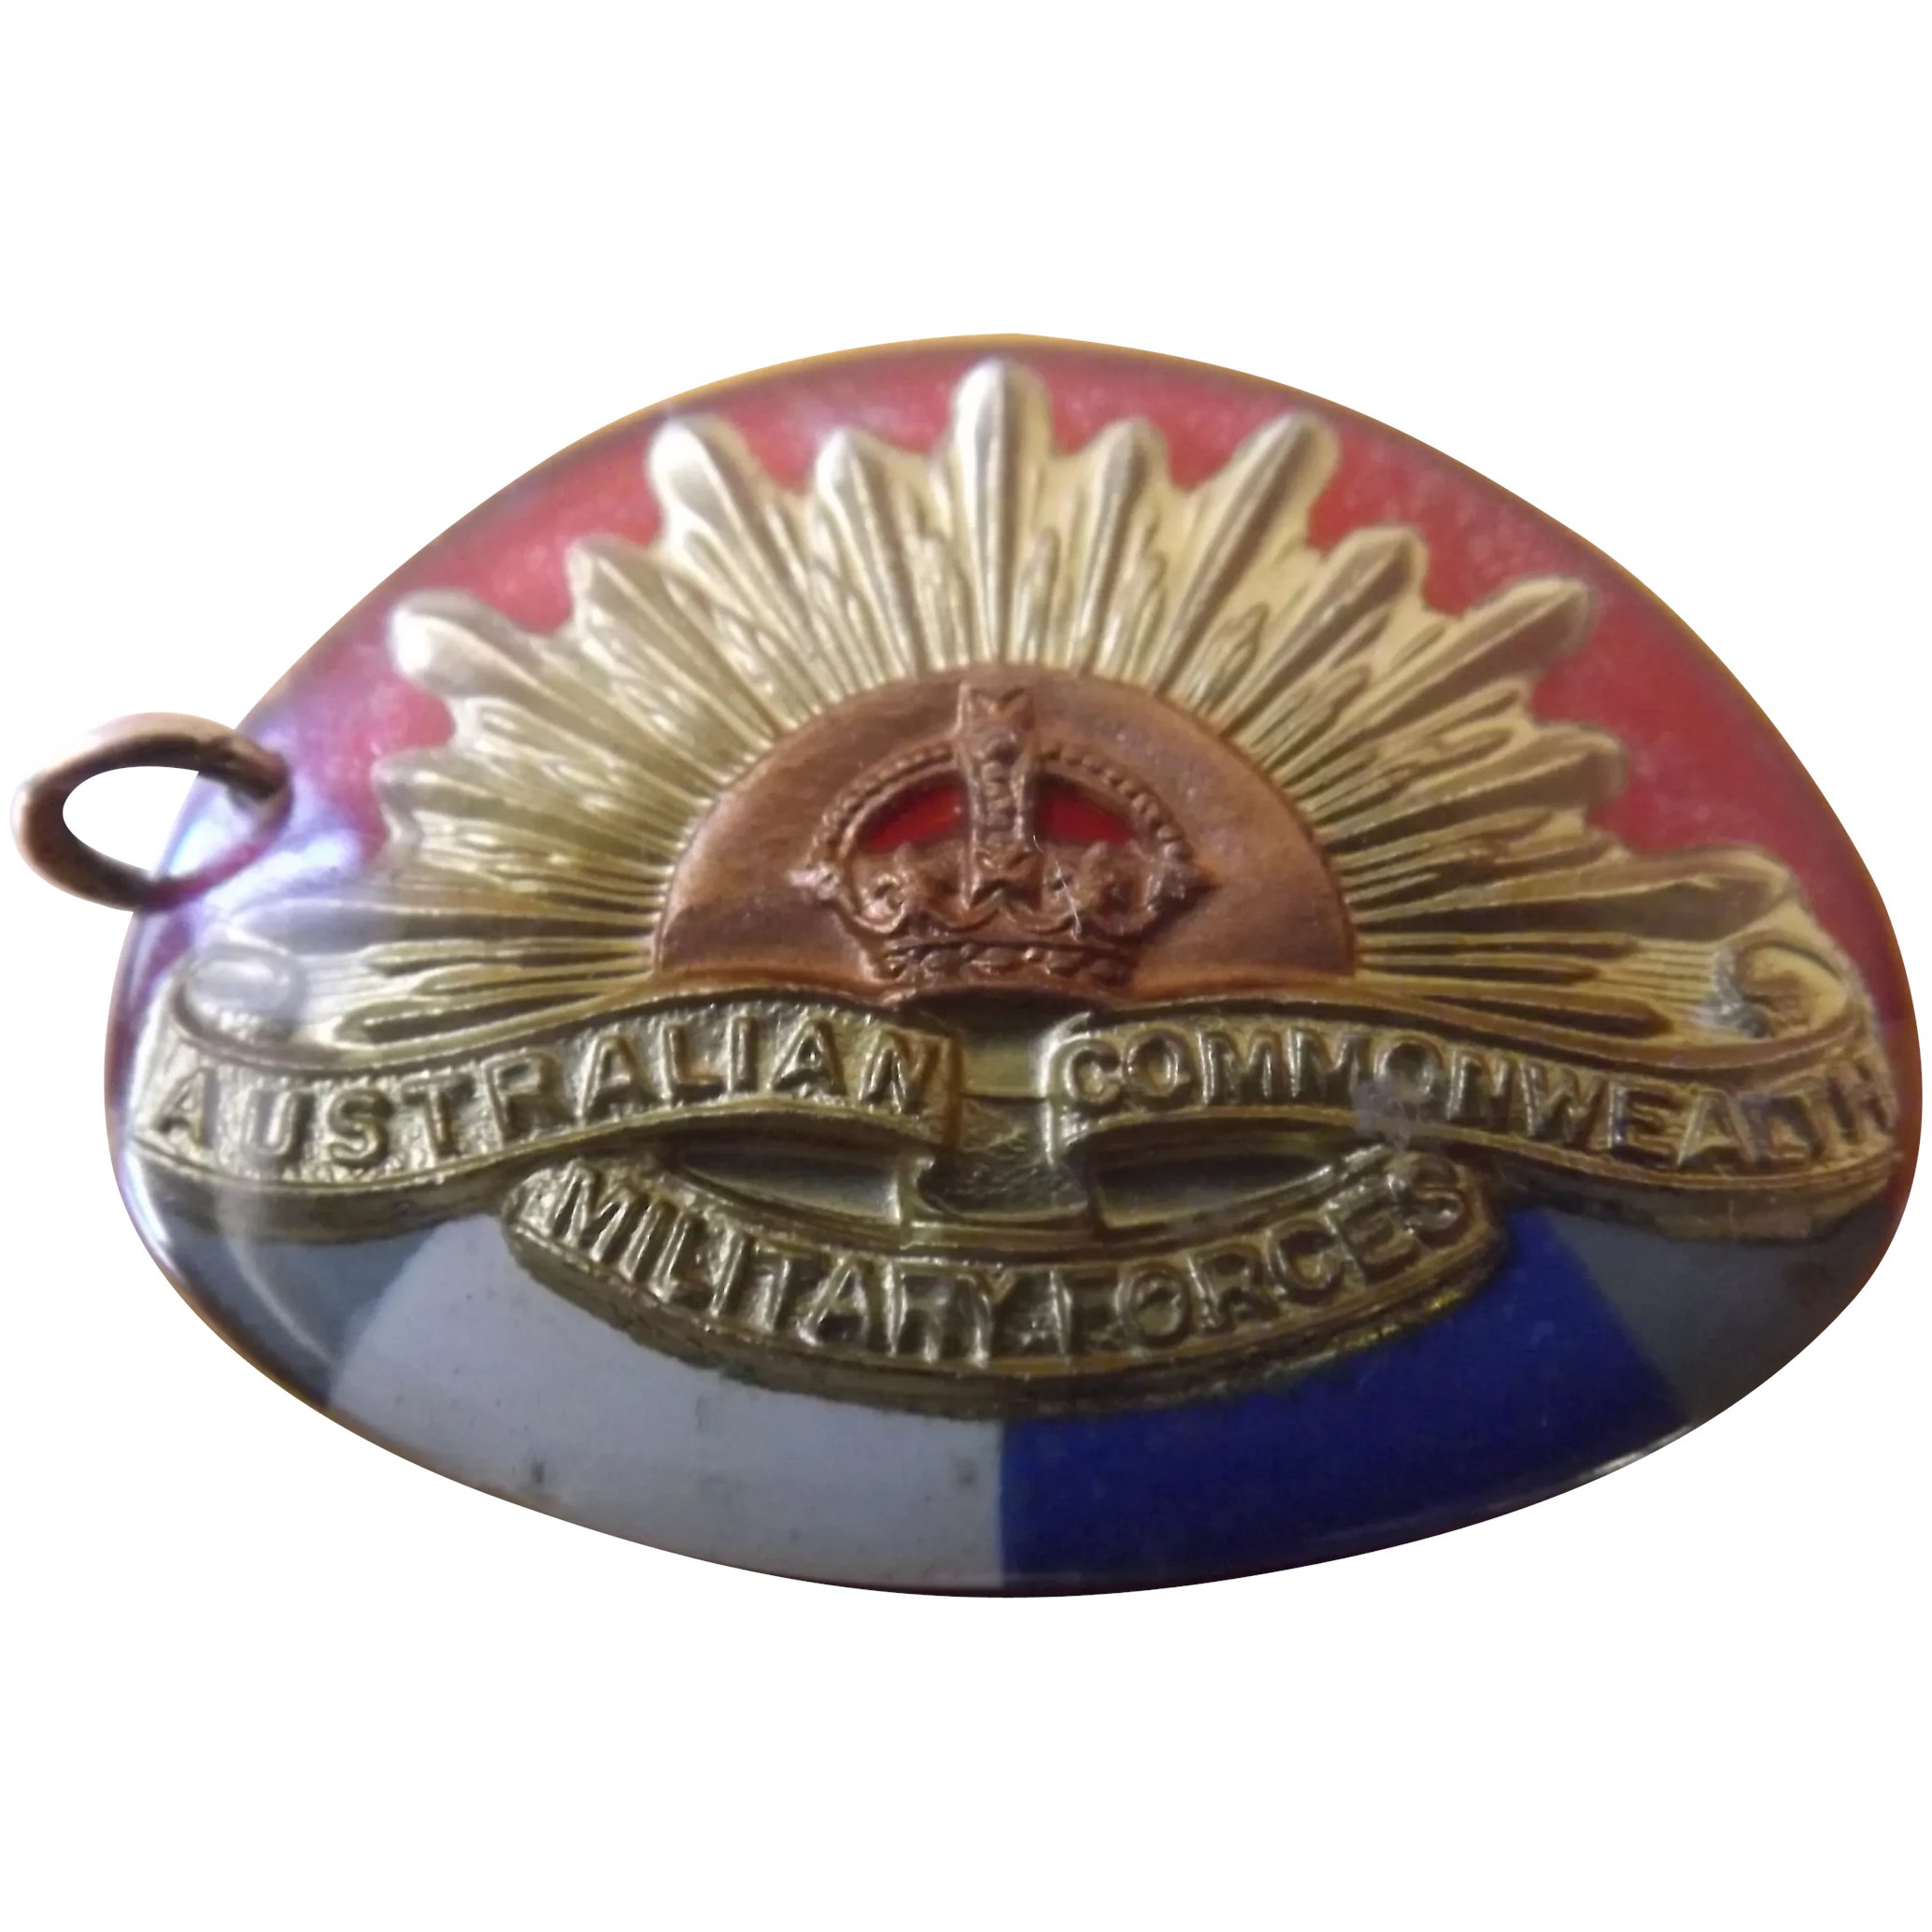 Australian Commonwealth Military Forces Sweetheart Badge